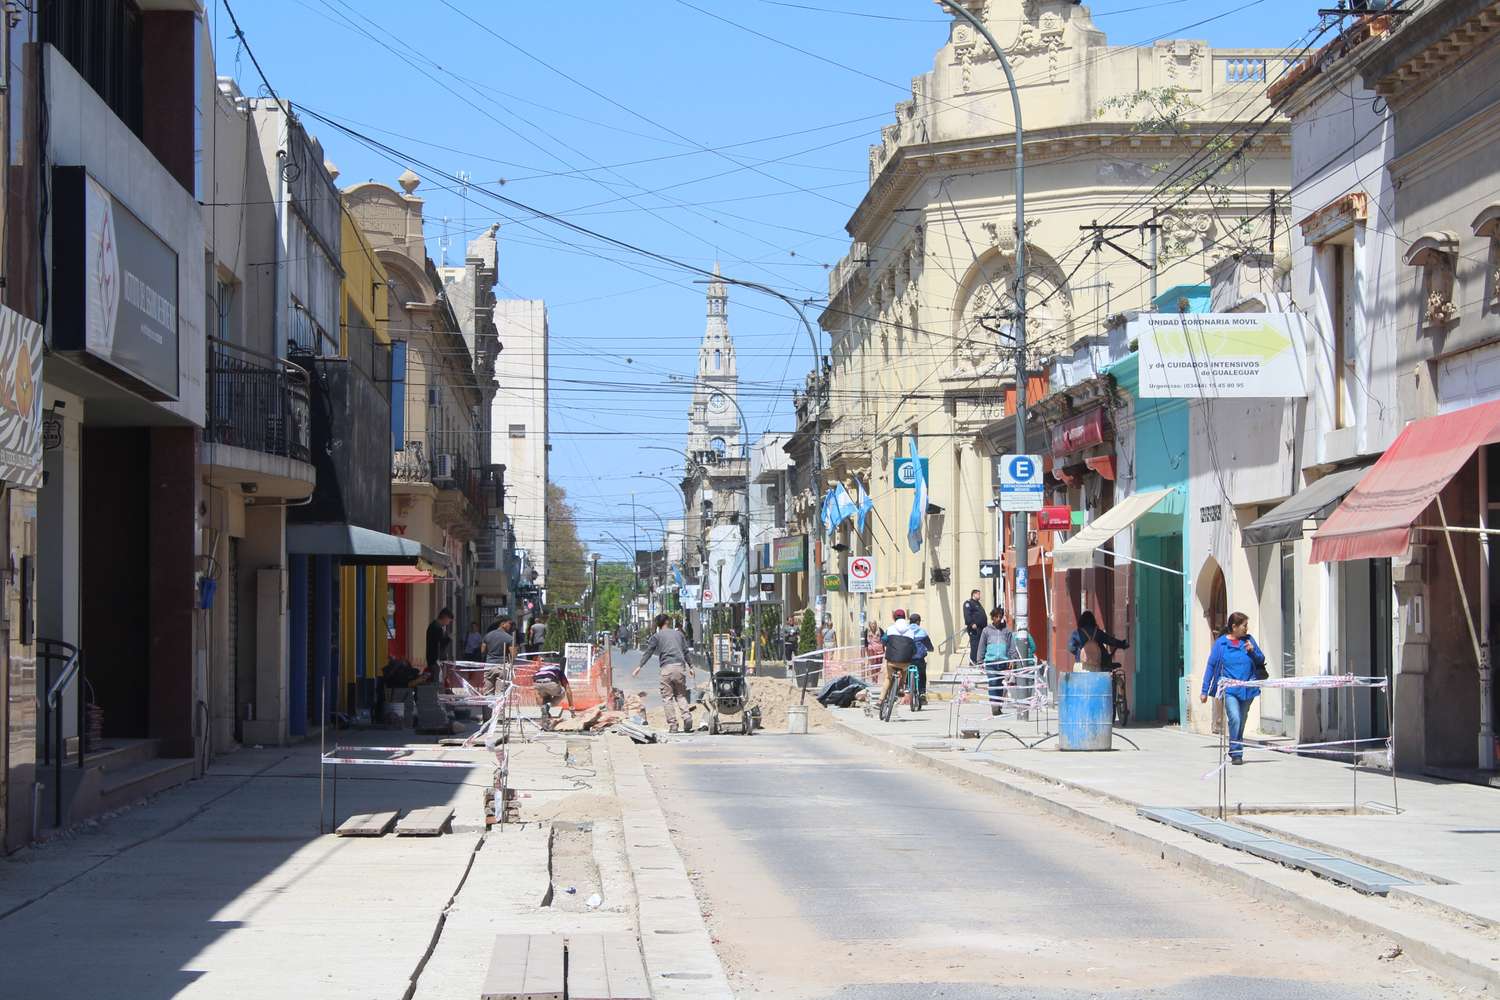 Casiano Otaegui: “La idea es tener finalizada la semi peatonal a fines de noviembre”